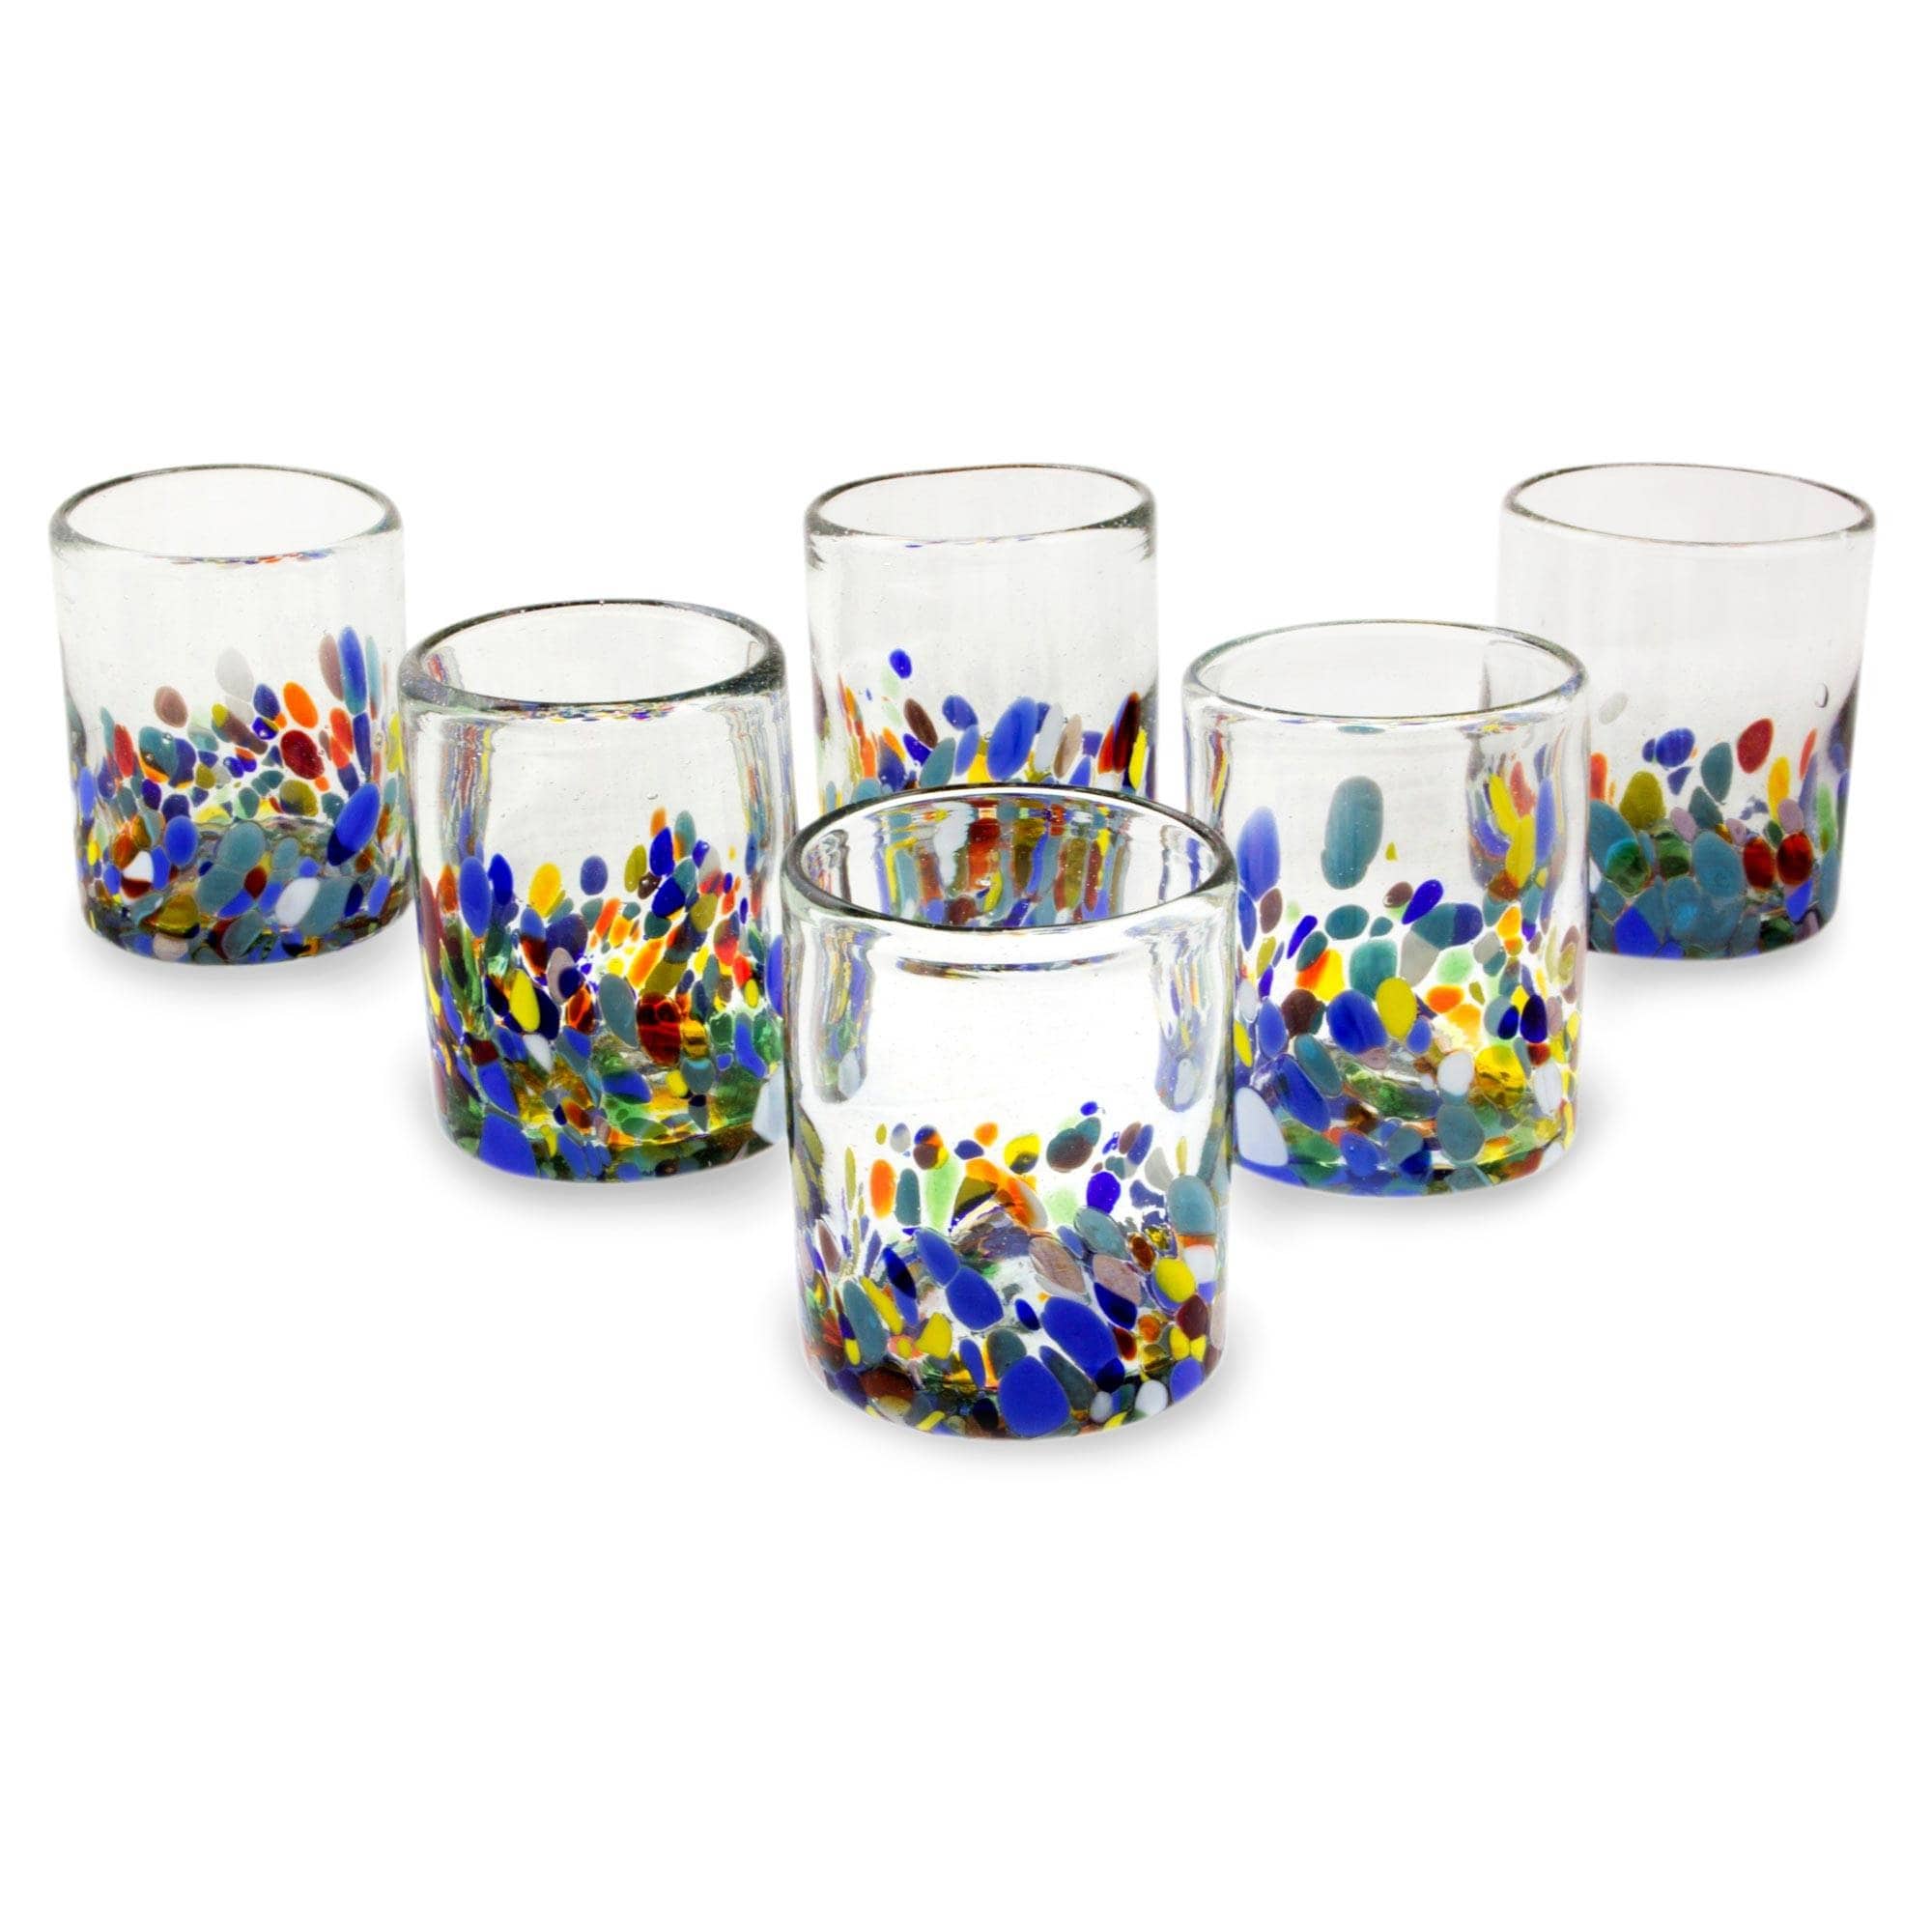 https://ak1.ostkcdn.com/images/products/is/images/direct/c351fe030f3bdfa6d245138a4f9ffed349809e05/Novica-Handmade-Confetti-Festival-Blown-Glass-Juice-Glasses-%28Set-Of-6%29.jpg